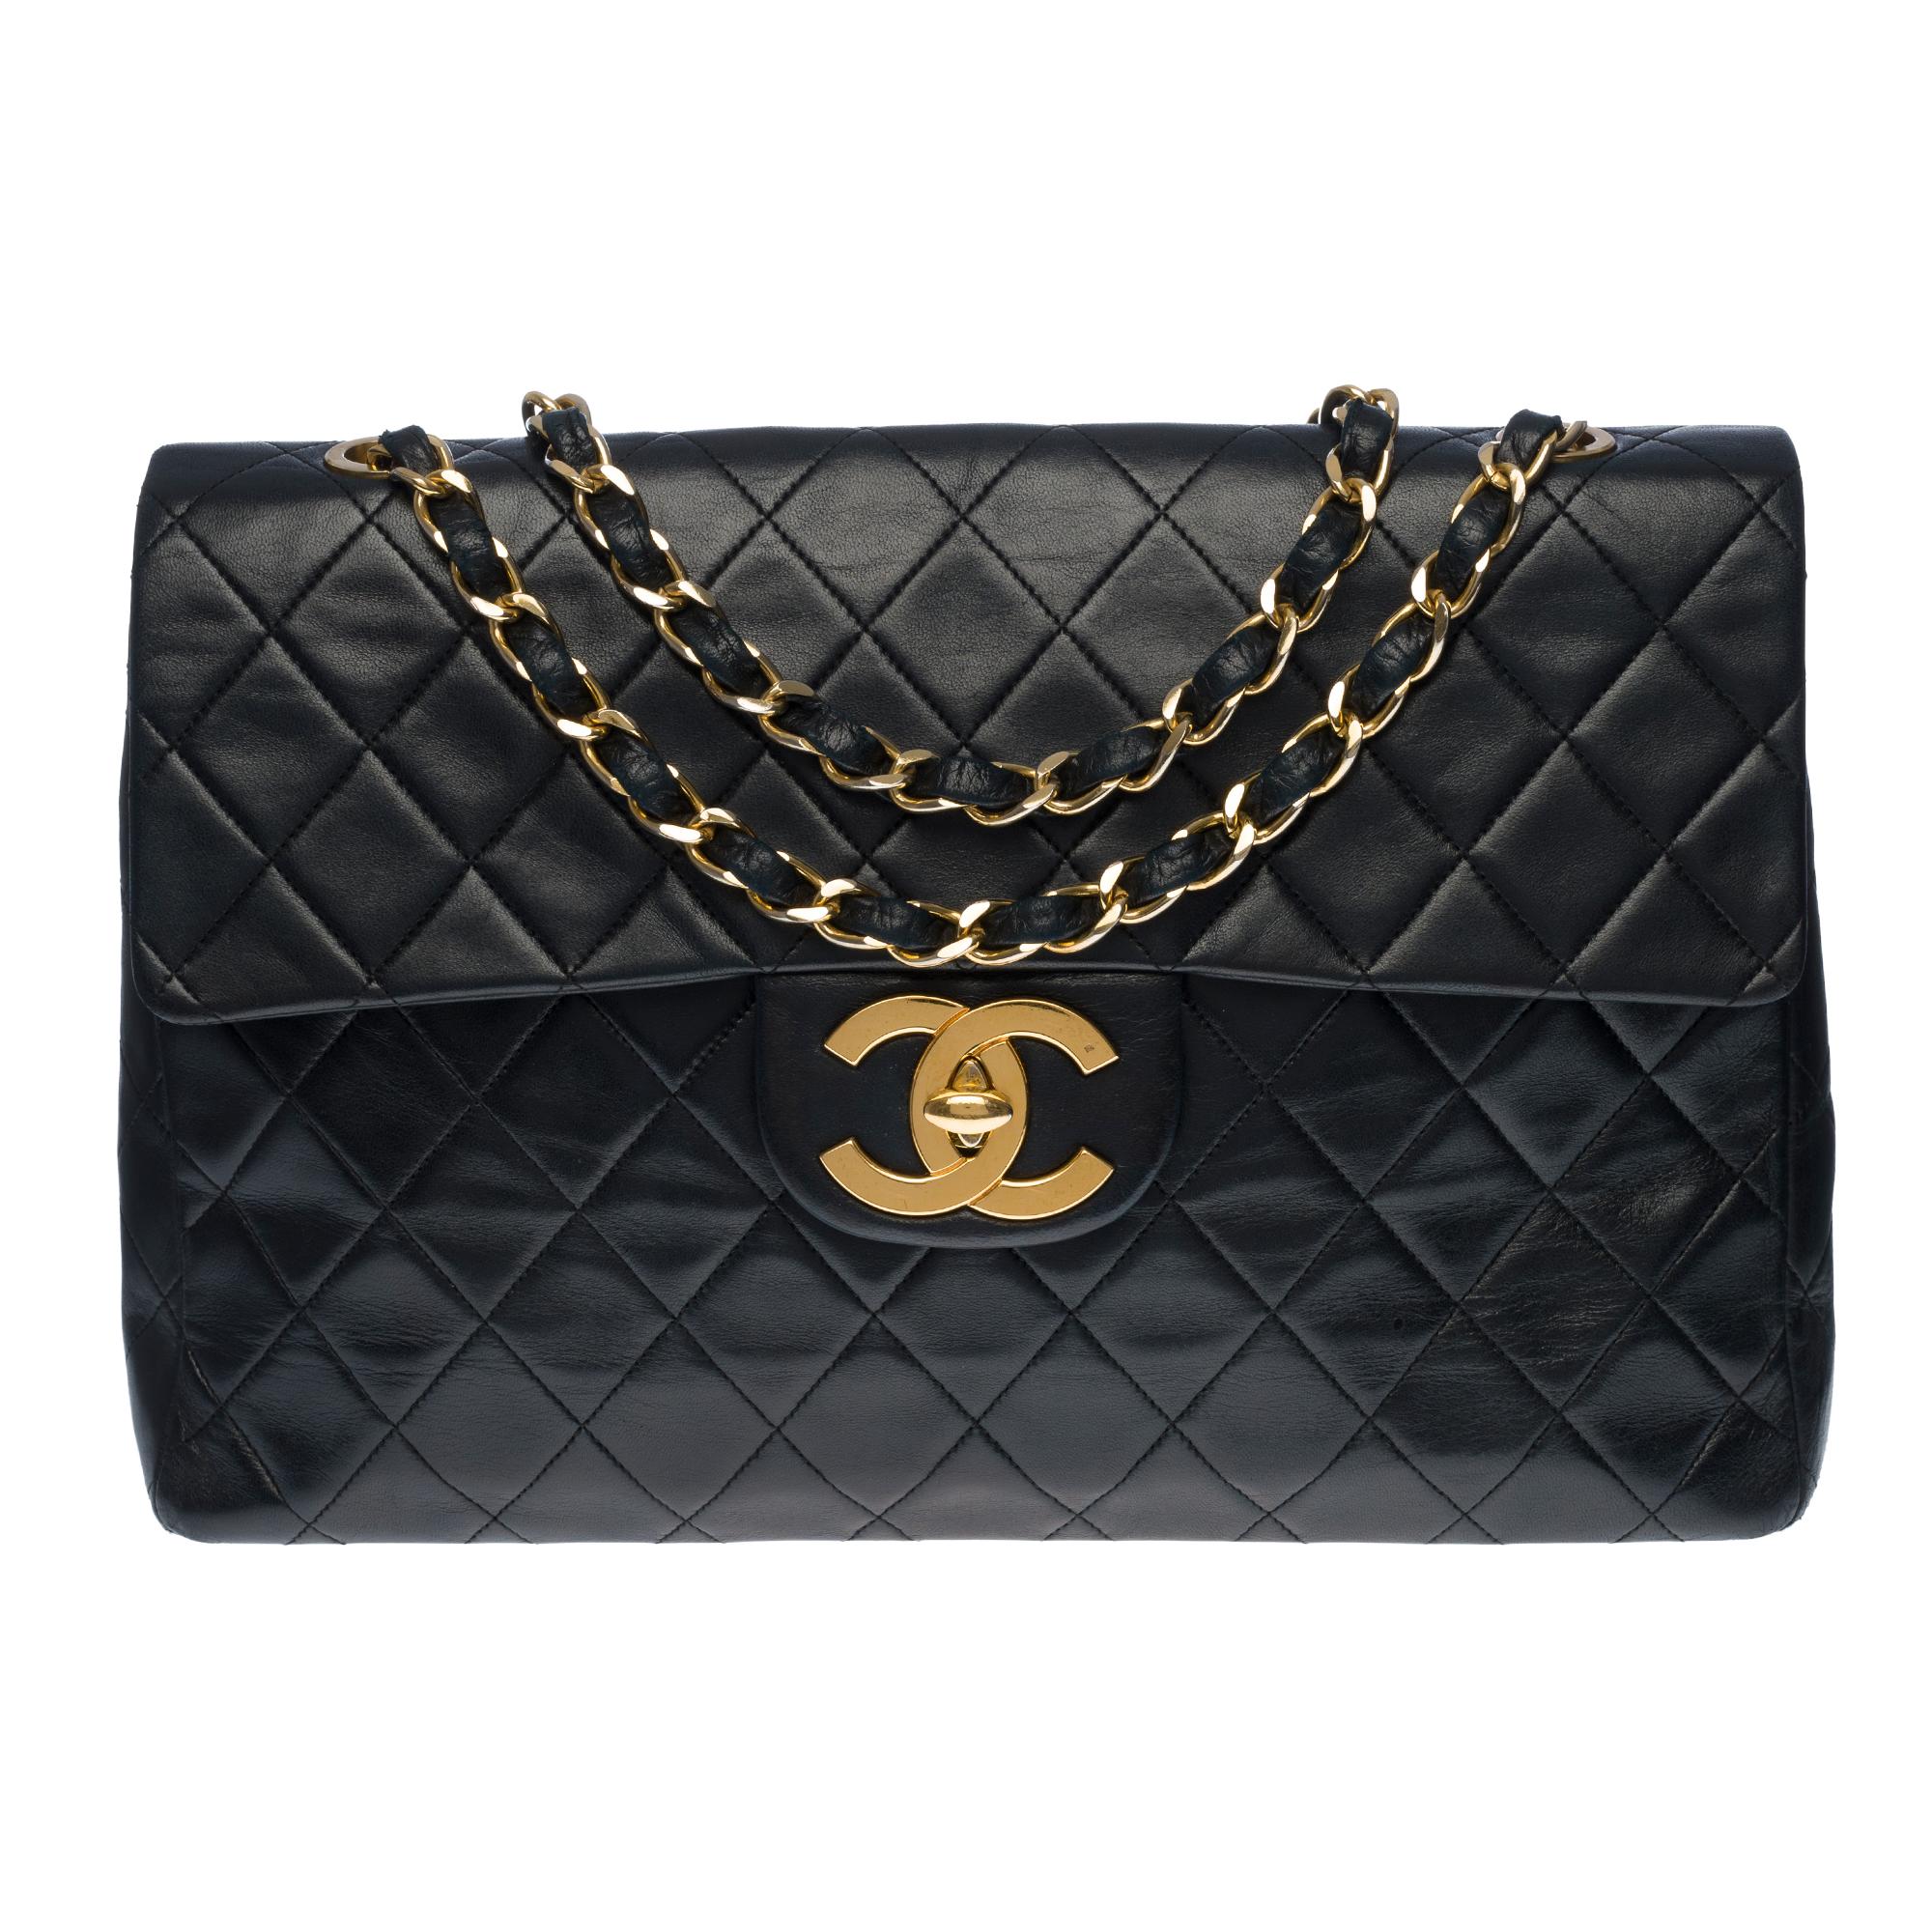 Chanel Timeless Maxi Jumbo single flap handbag in black quilted lambskin, GHW